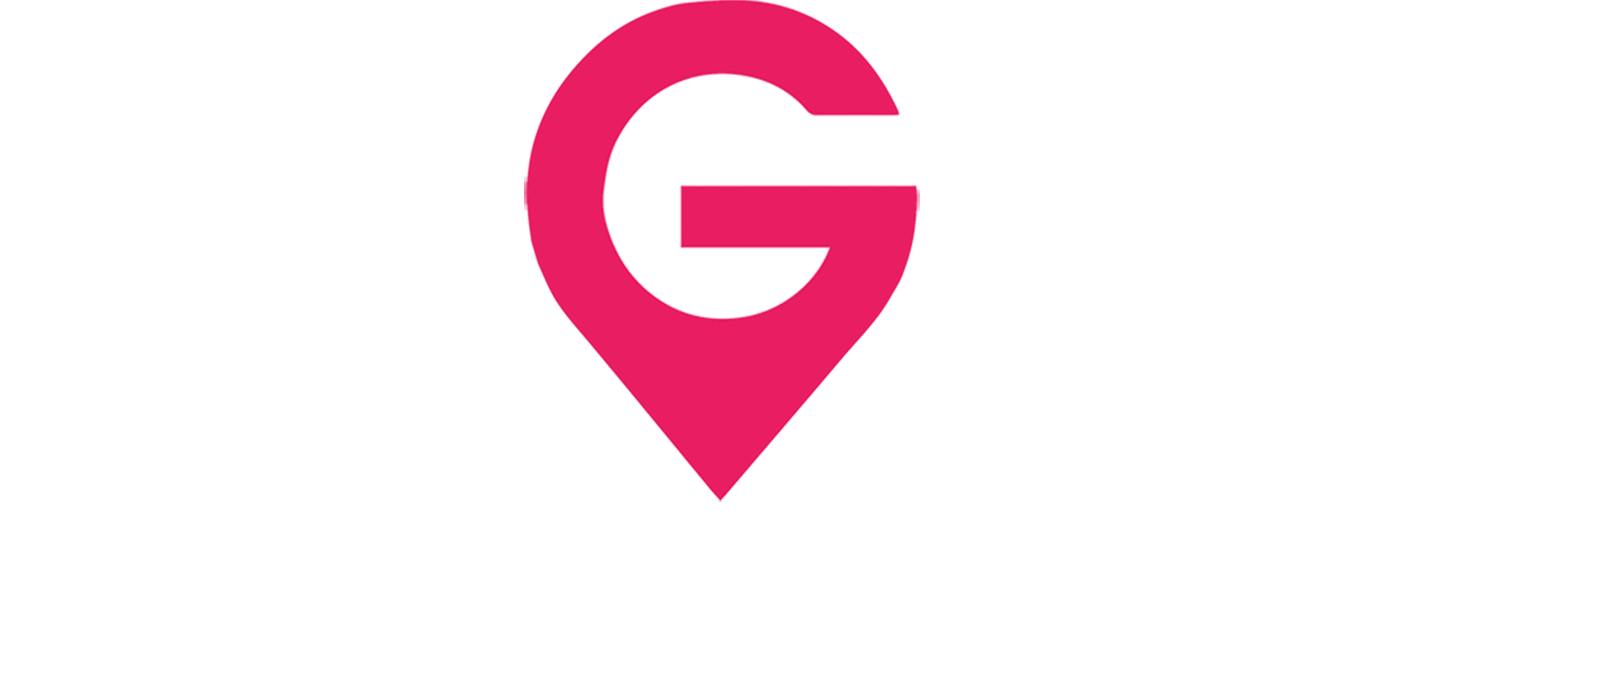 My Guide Boston